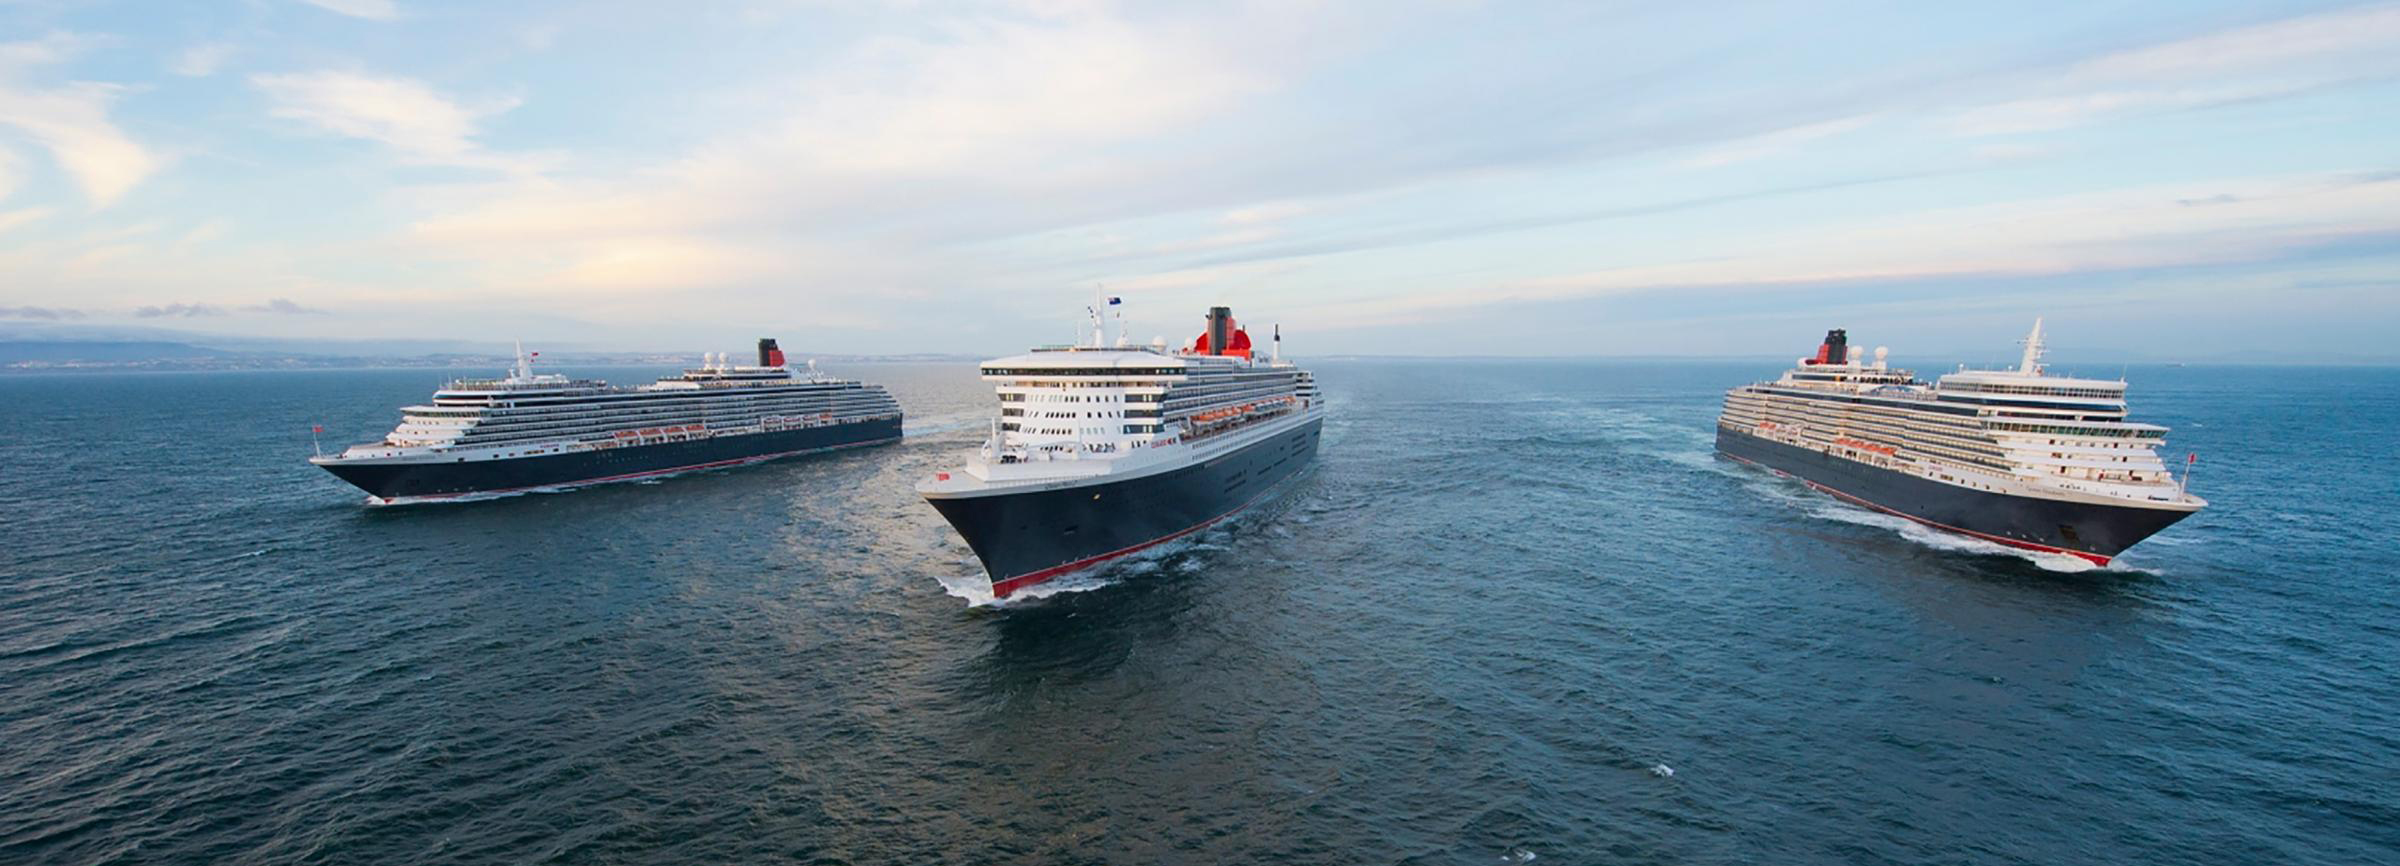 De drie schepen van Cunard die wereldreizen maken